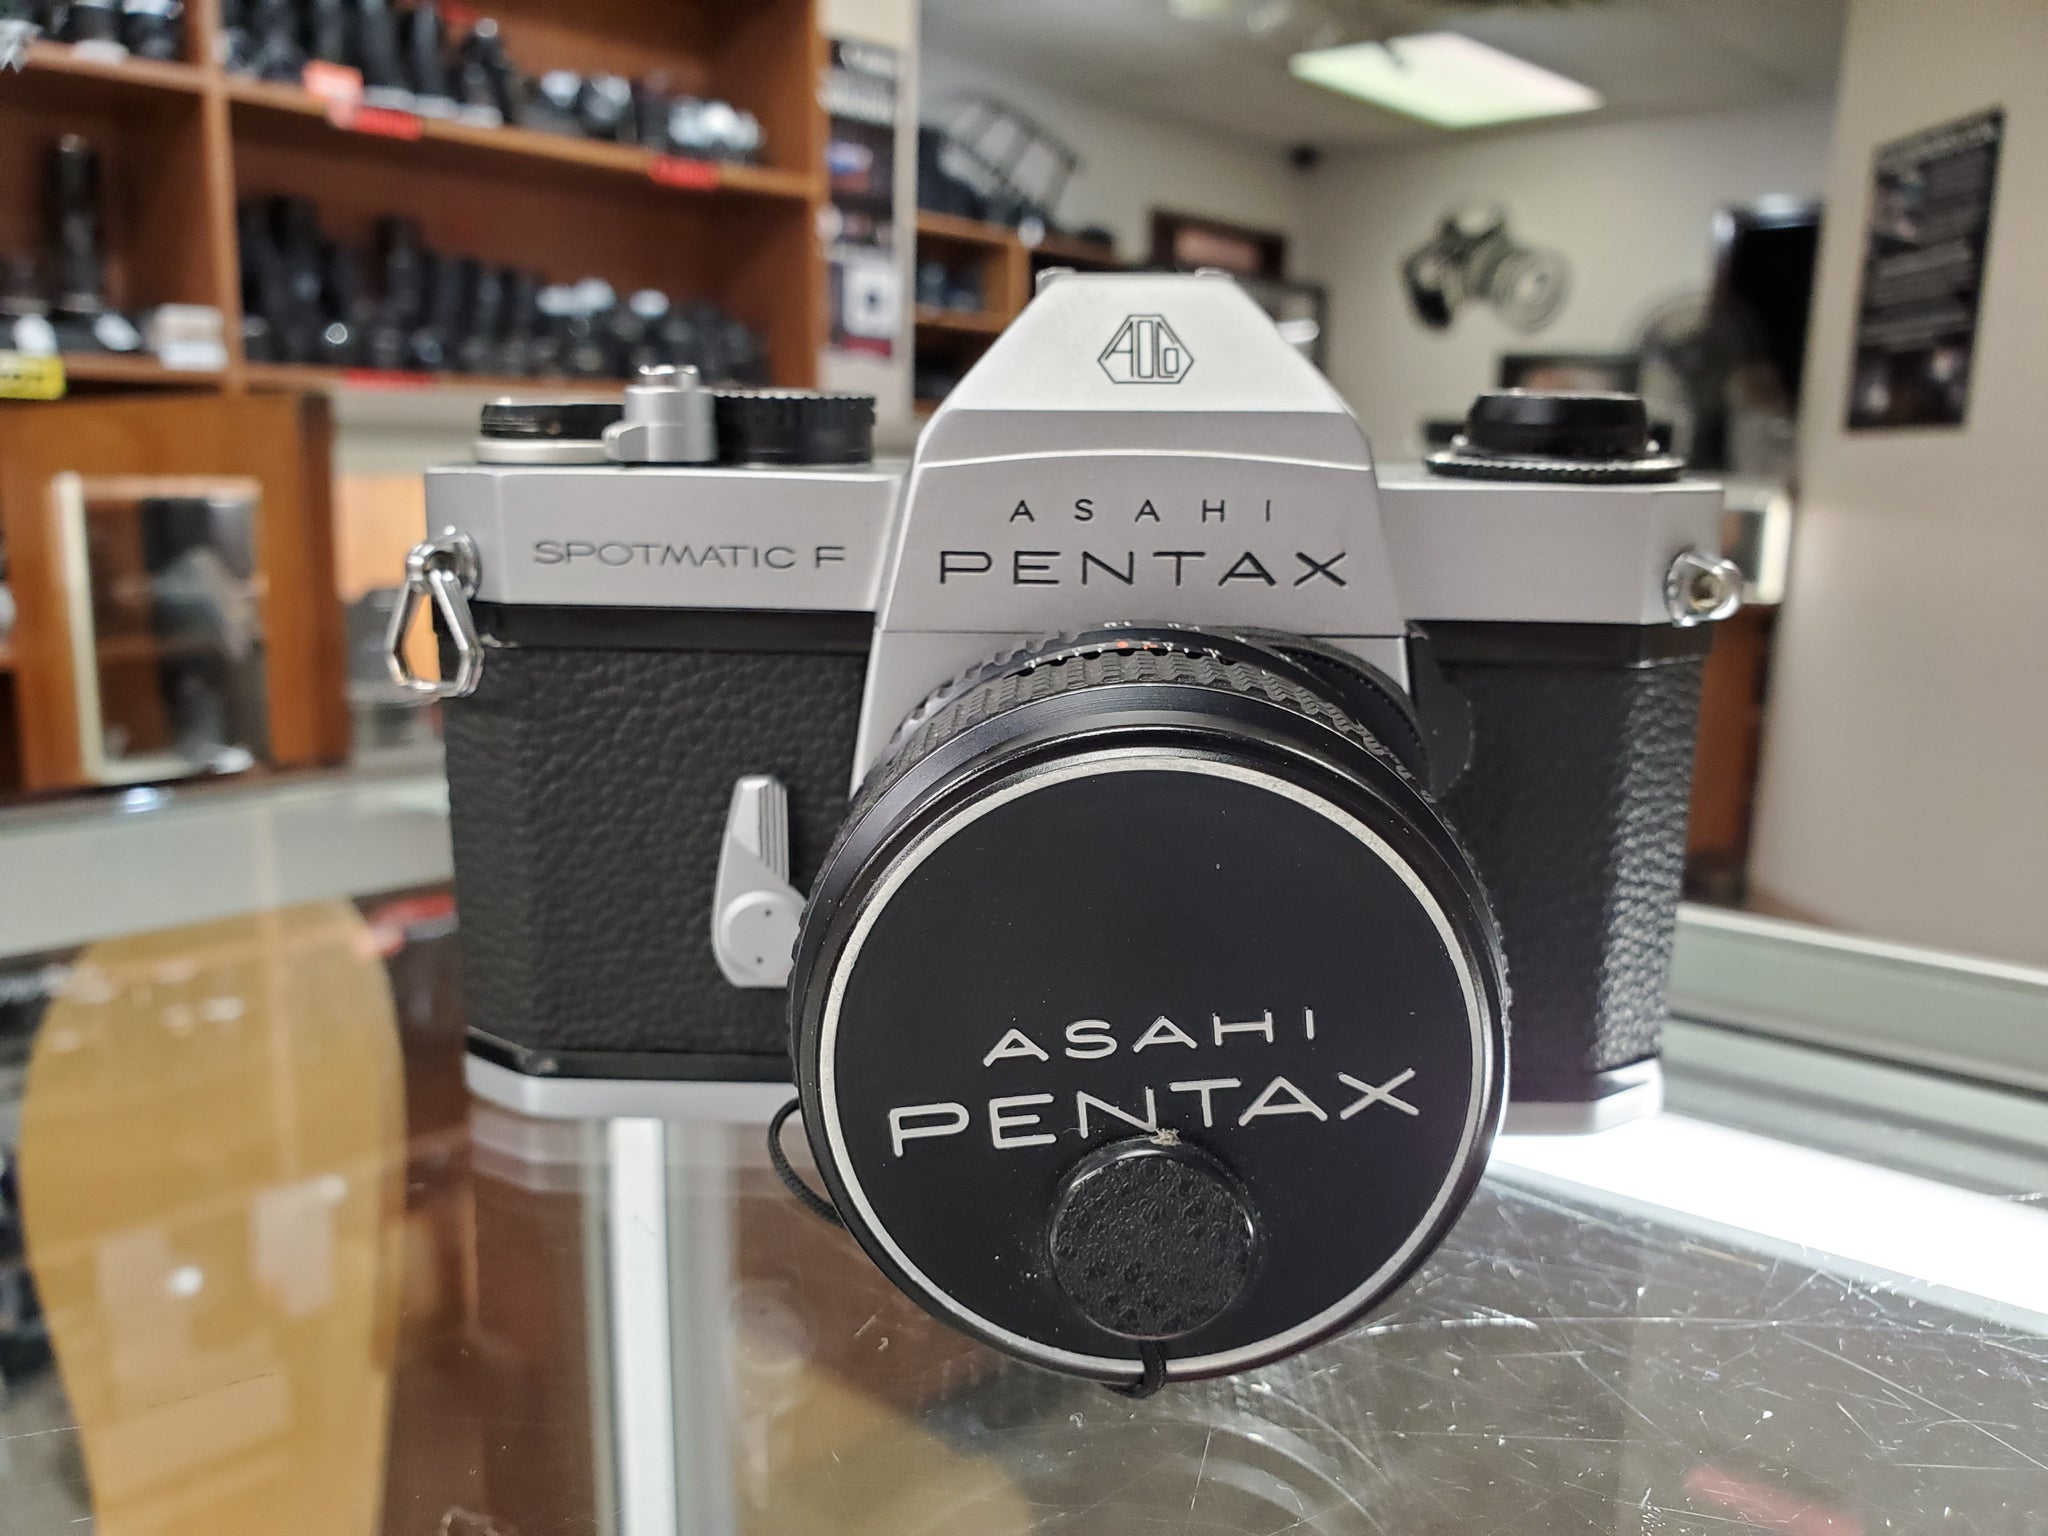 Asahi Pentax Spotmatic F, w/ Takumar 55mm 1.8 lens, Both